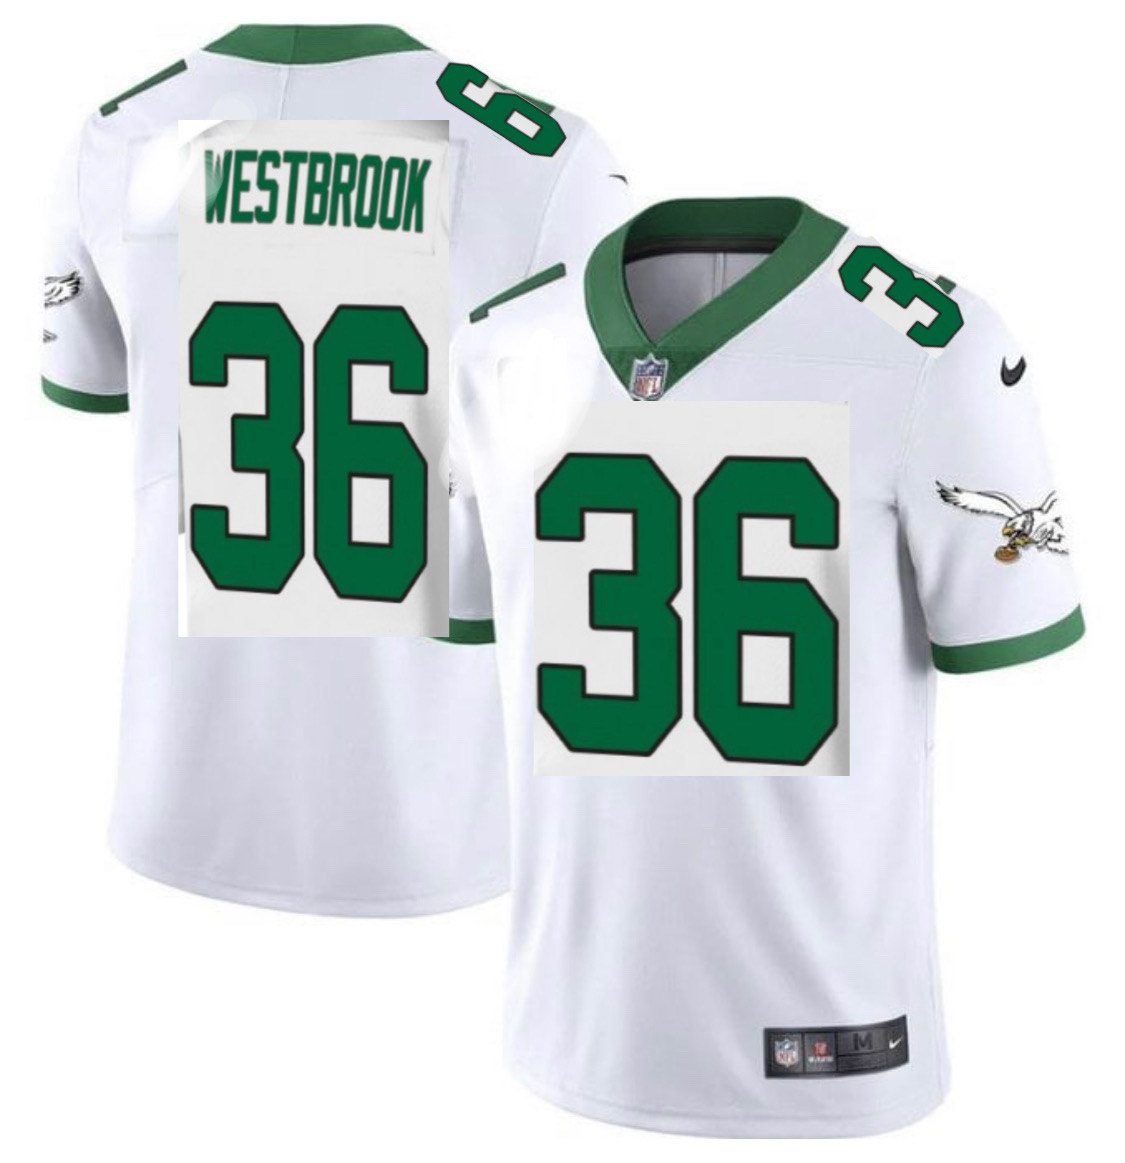 2023 Men NFL Philadelphia Eagles #36 Westbrook white Customizedalternate Jersey